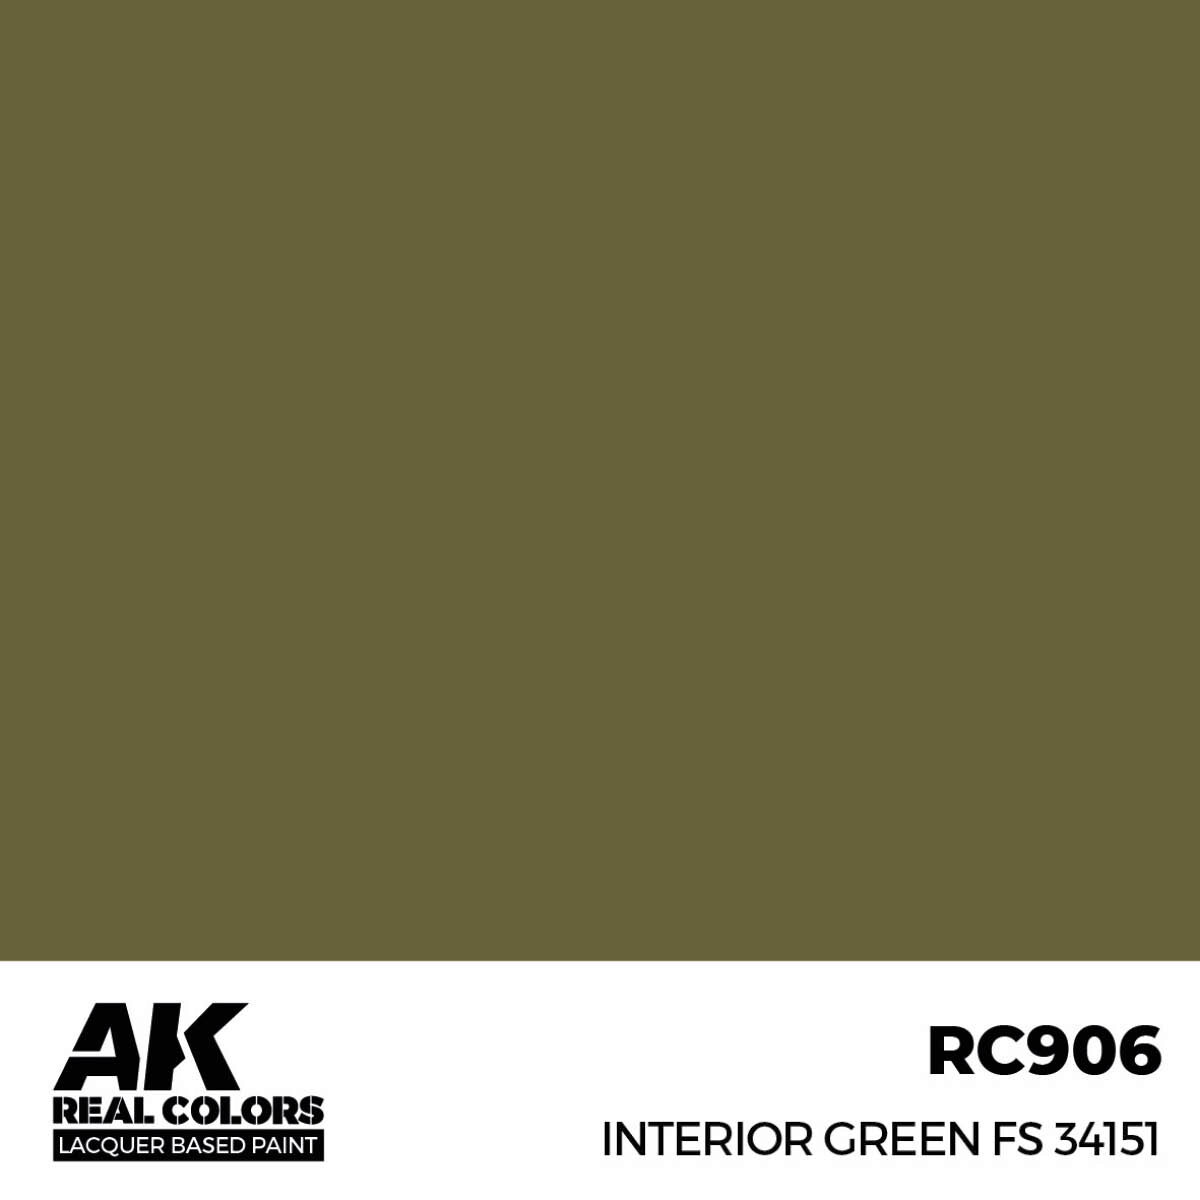 AK RC906 Real Colors Interior Green FS 34151 17 ml.